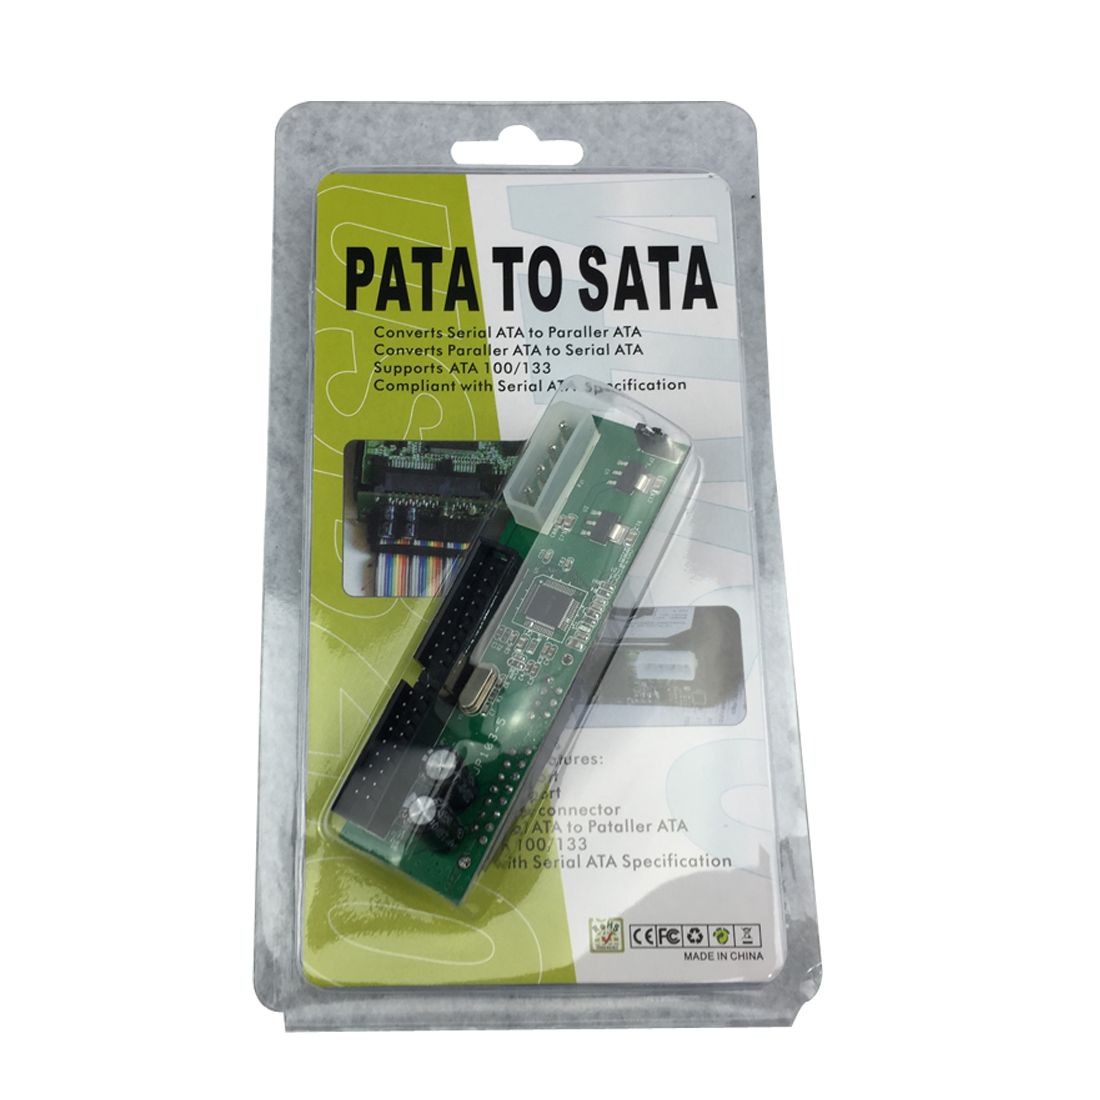 Caturda-C0322-ATA-to-SATA-PATA-to-SATA-DVD-Coverter-SATA-to-IDE-Two-Way-Card-for-Raspberry-Pi-1718370